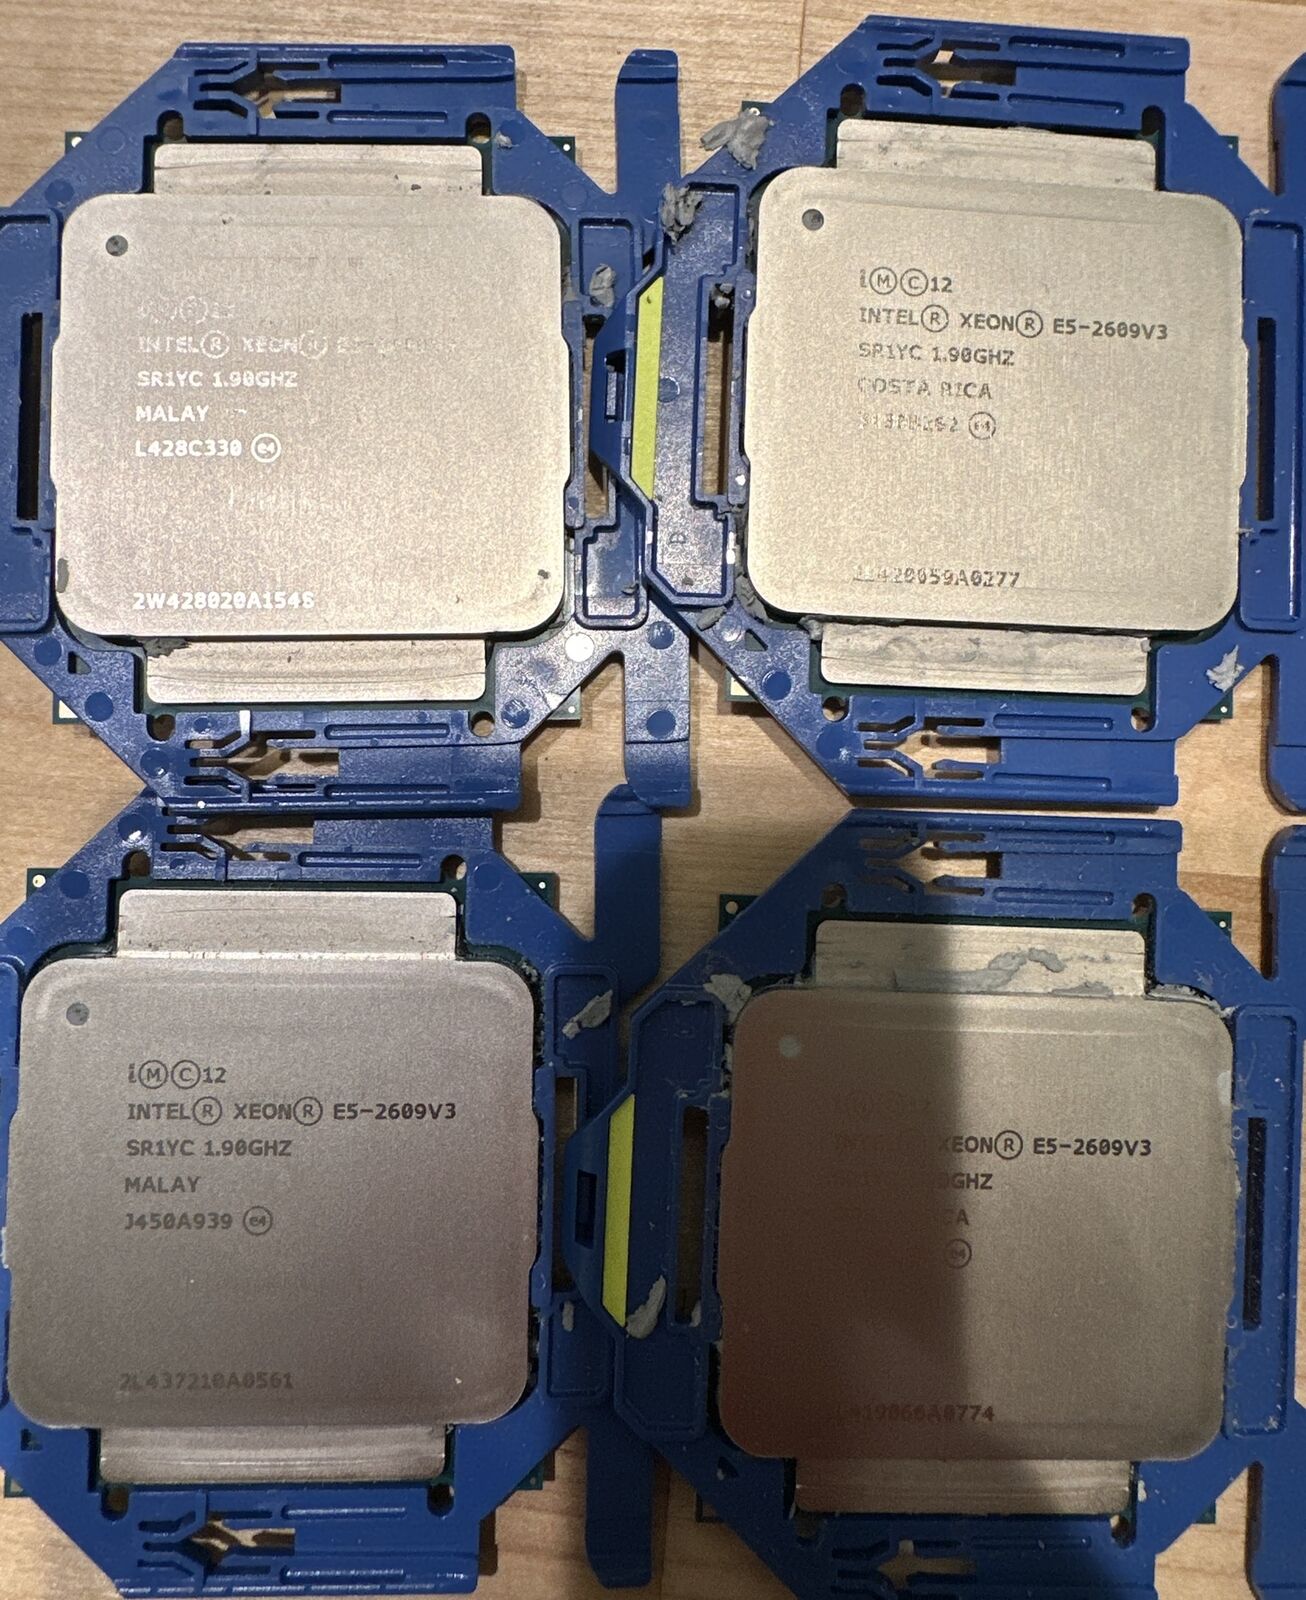 Lot of 4 Intel Xeon E5-2609 V3 15M Cache 1.90GHz Six-Core CPU Processors SRY1YC